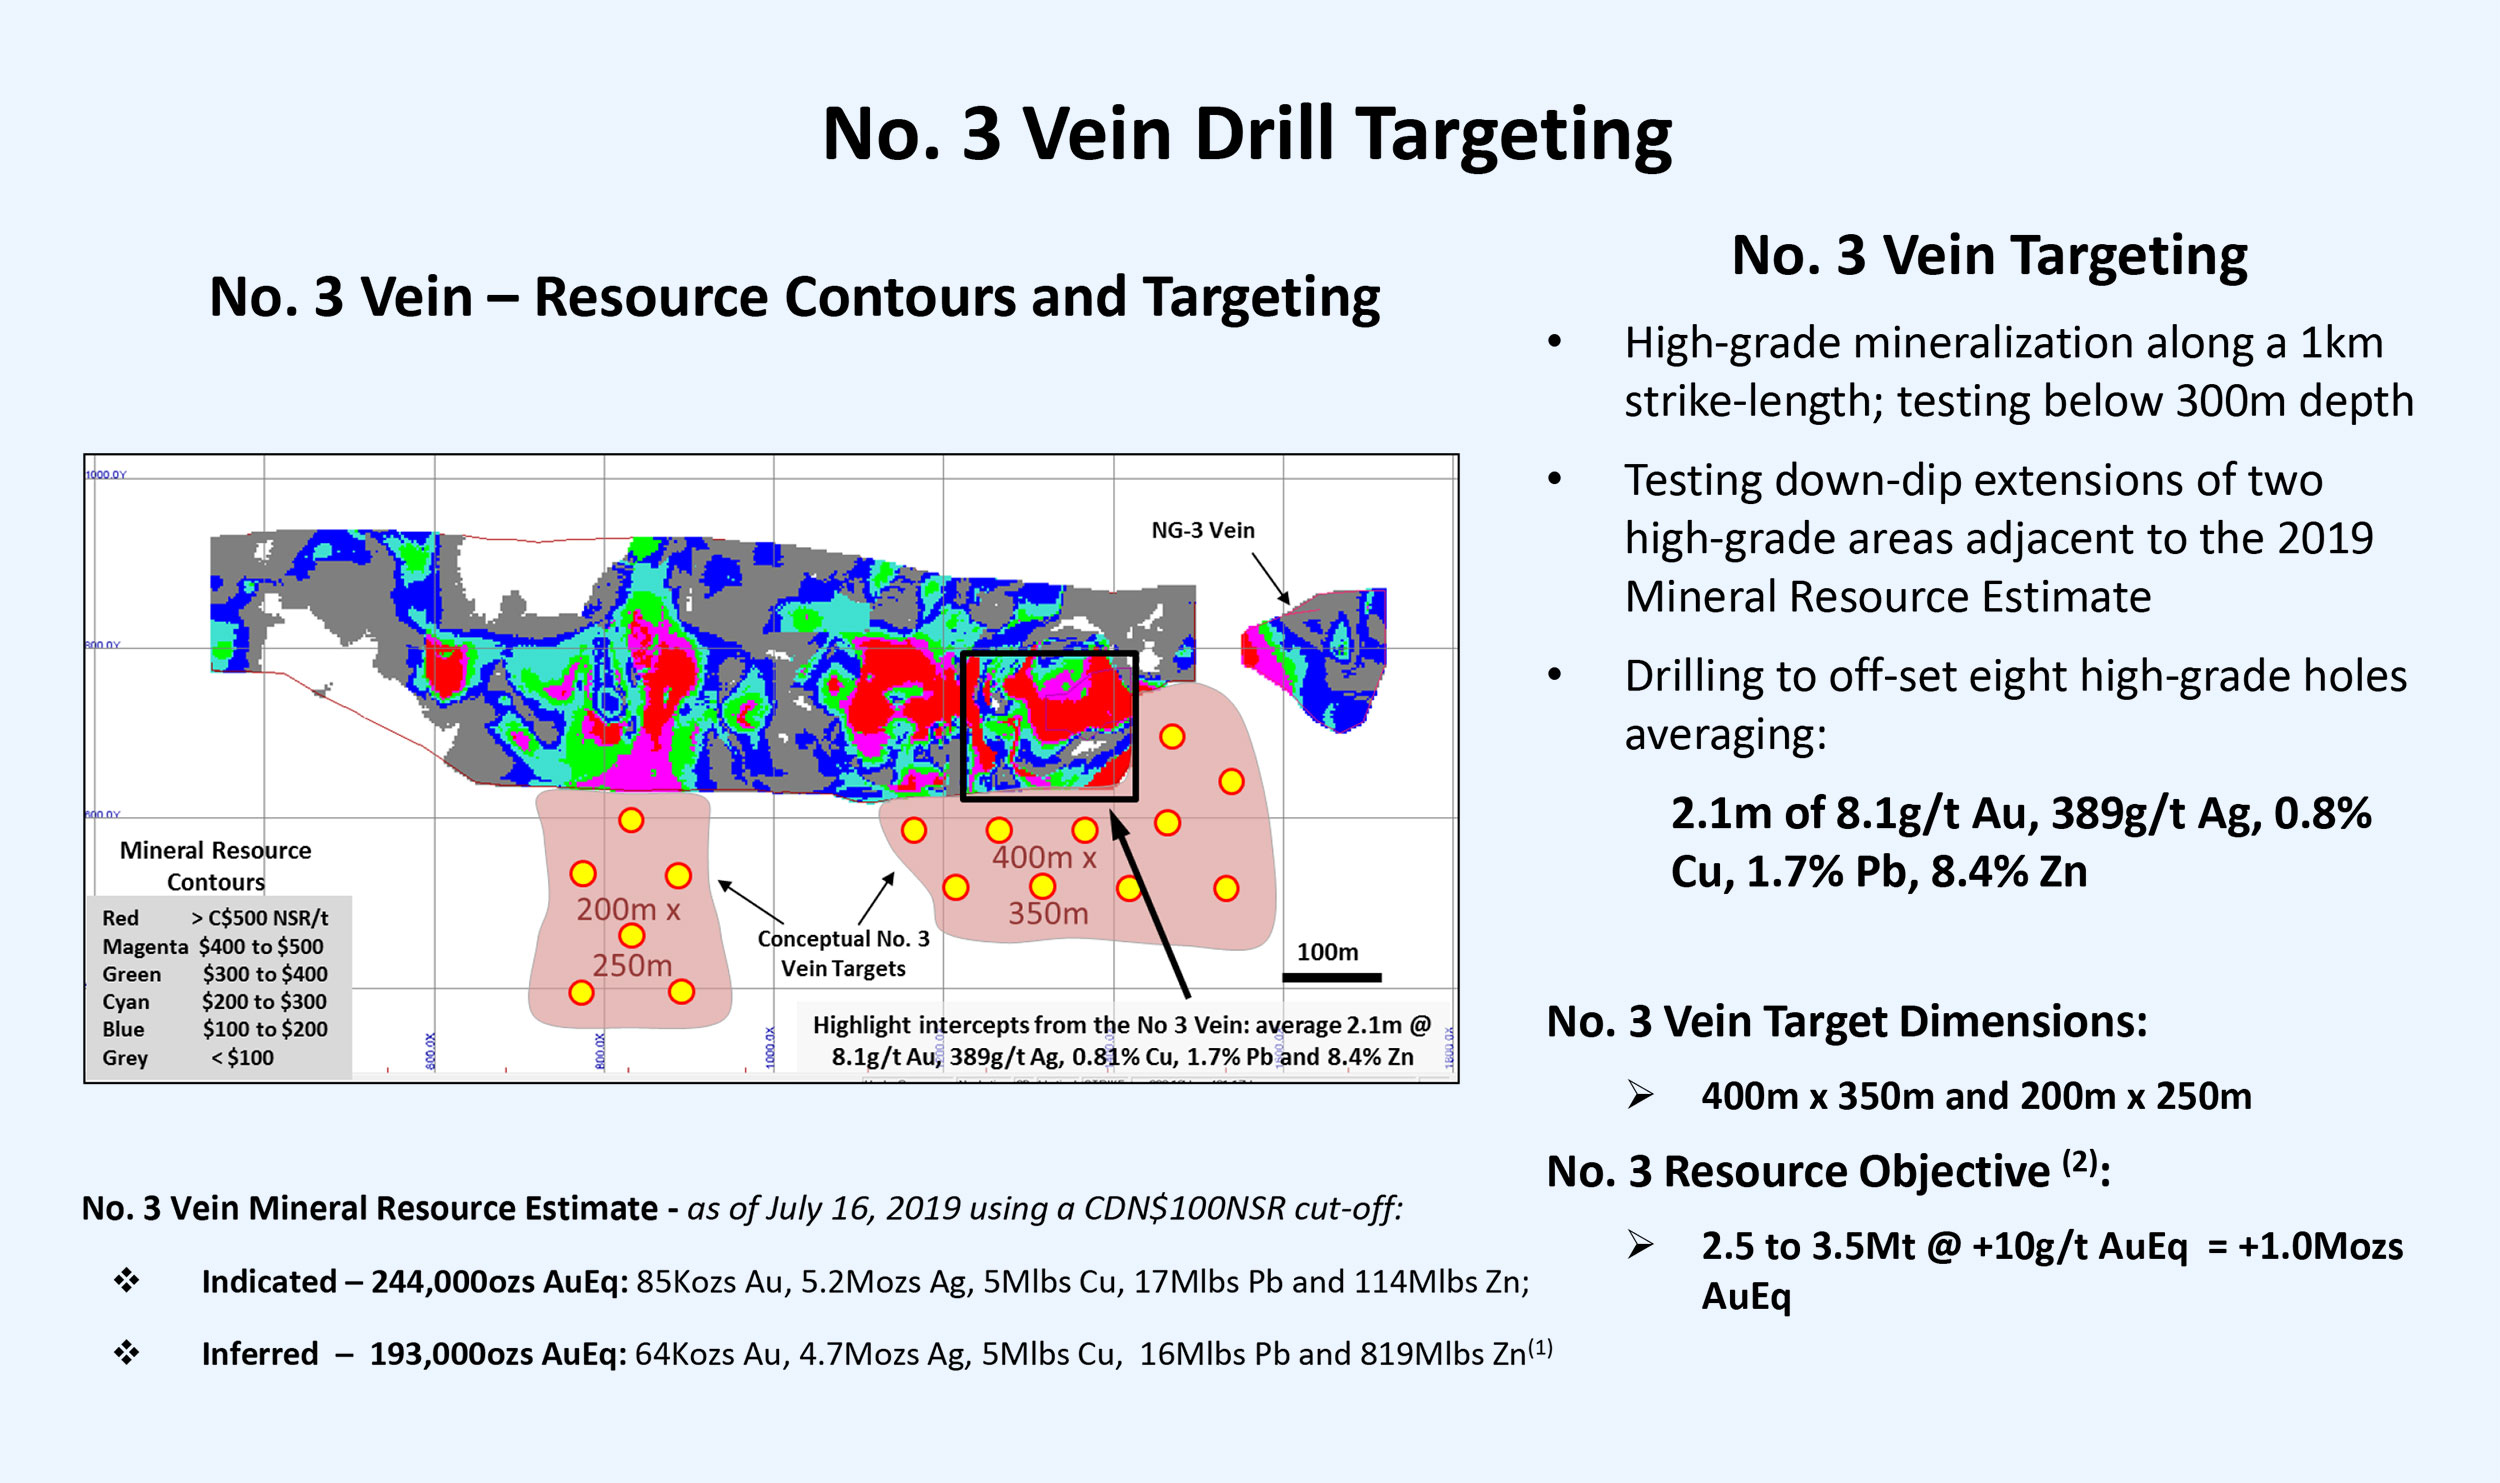 Vein Drill Targeting